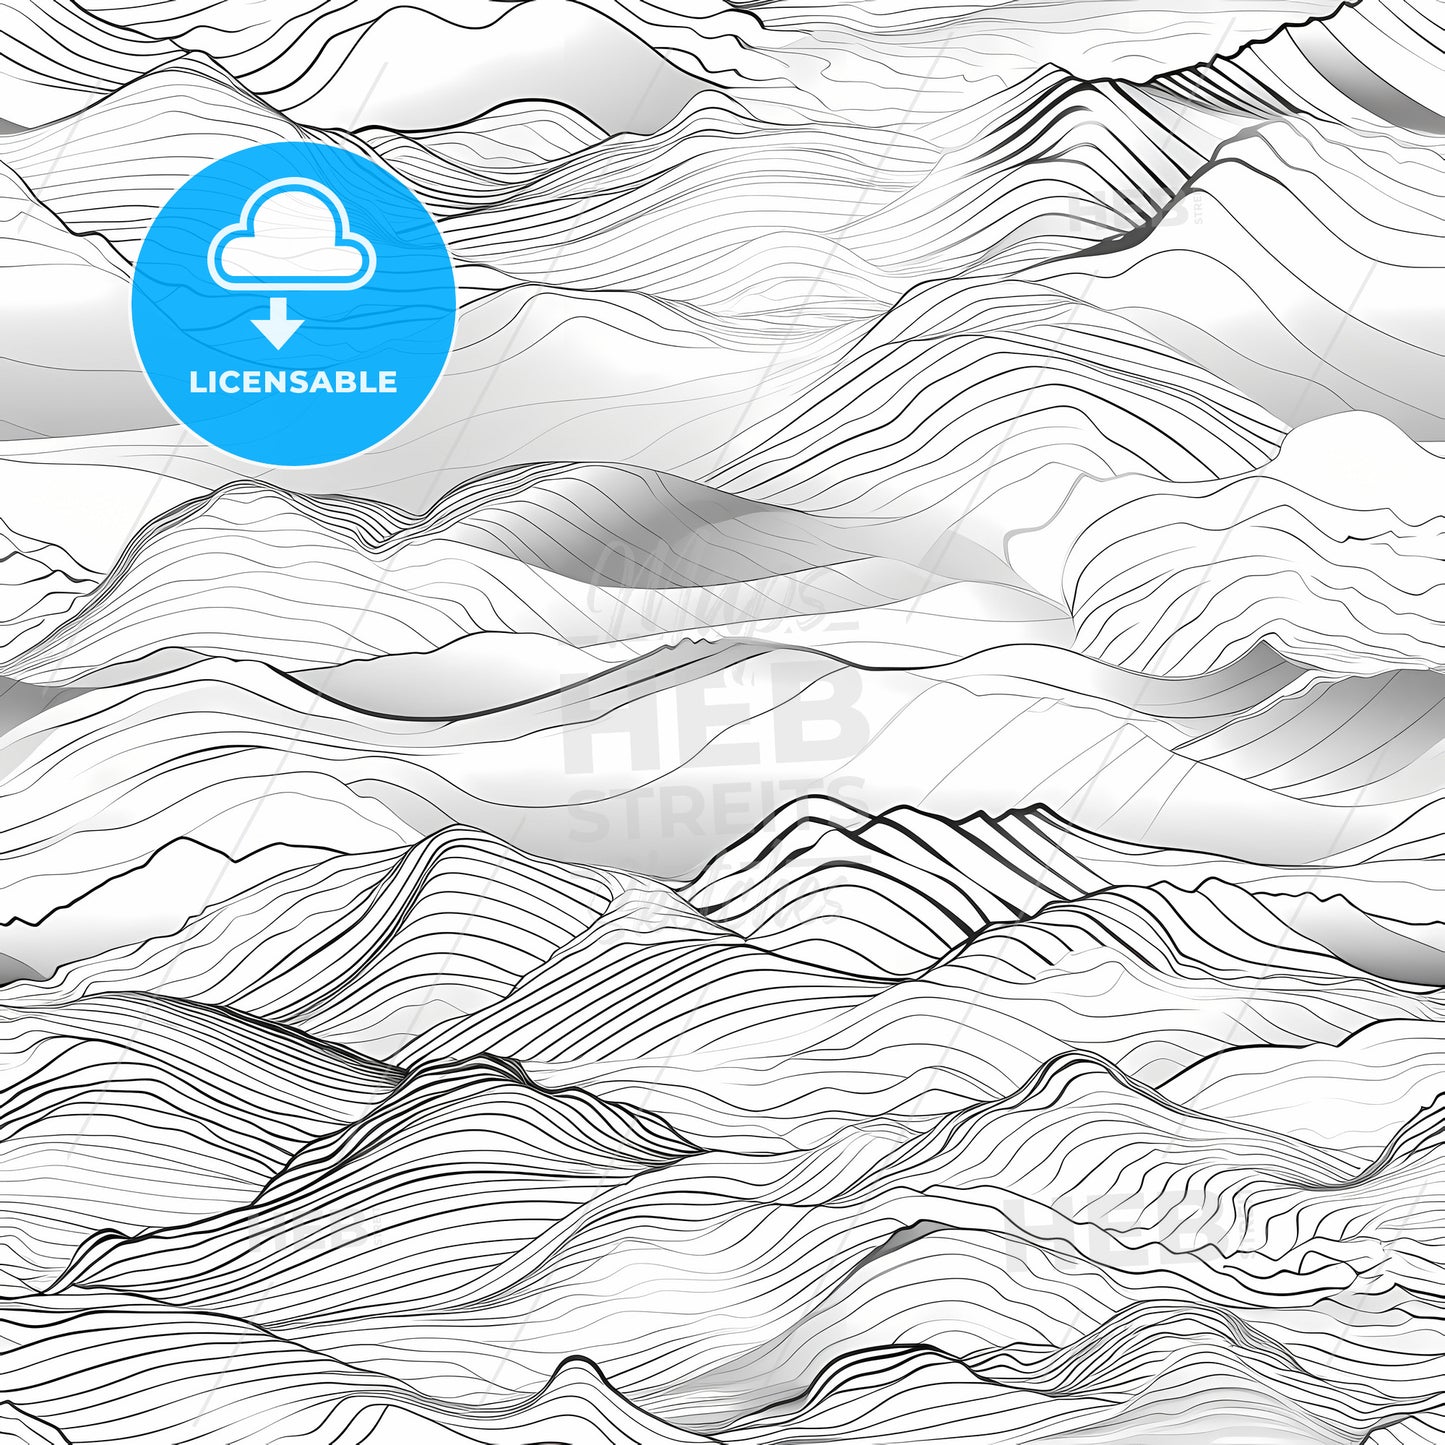 3D Mountain Range, A Black And White Image Of Mountains